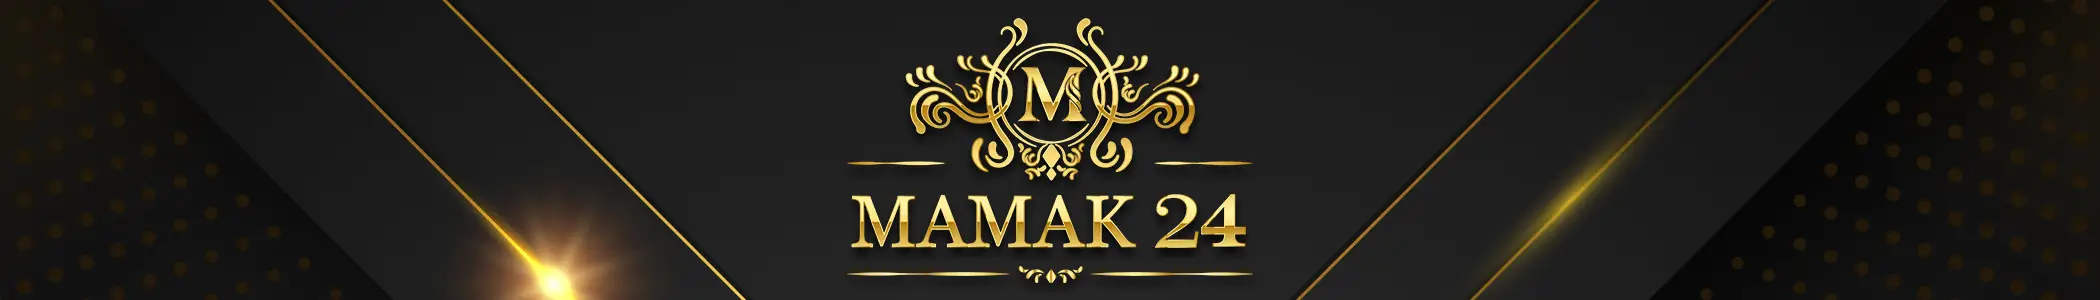 mamak24 casino mission vision